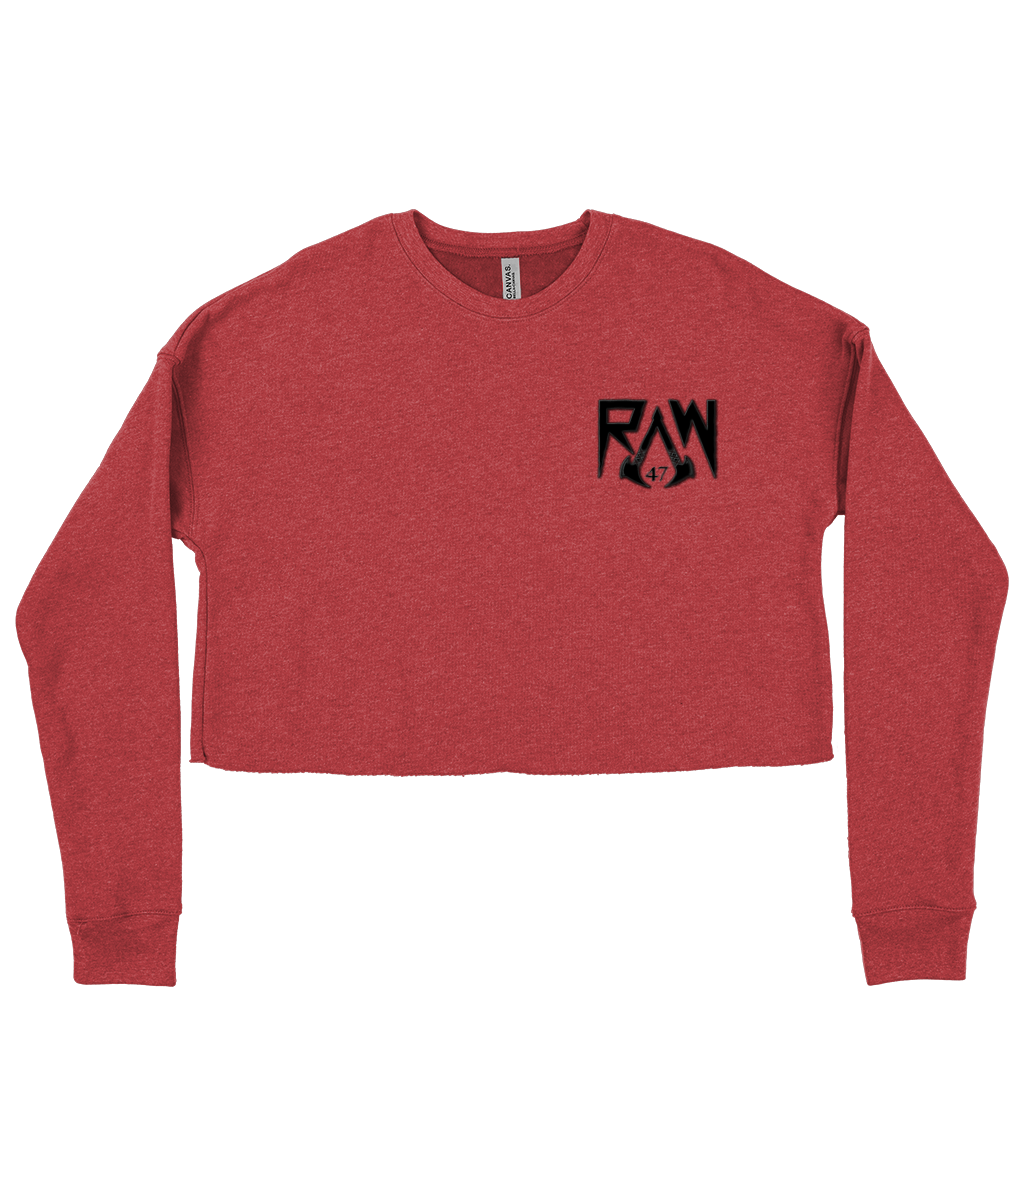 Raw47 Ladies Cropped Sweatshirt